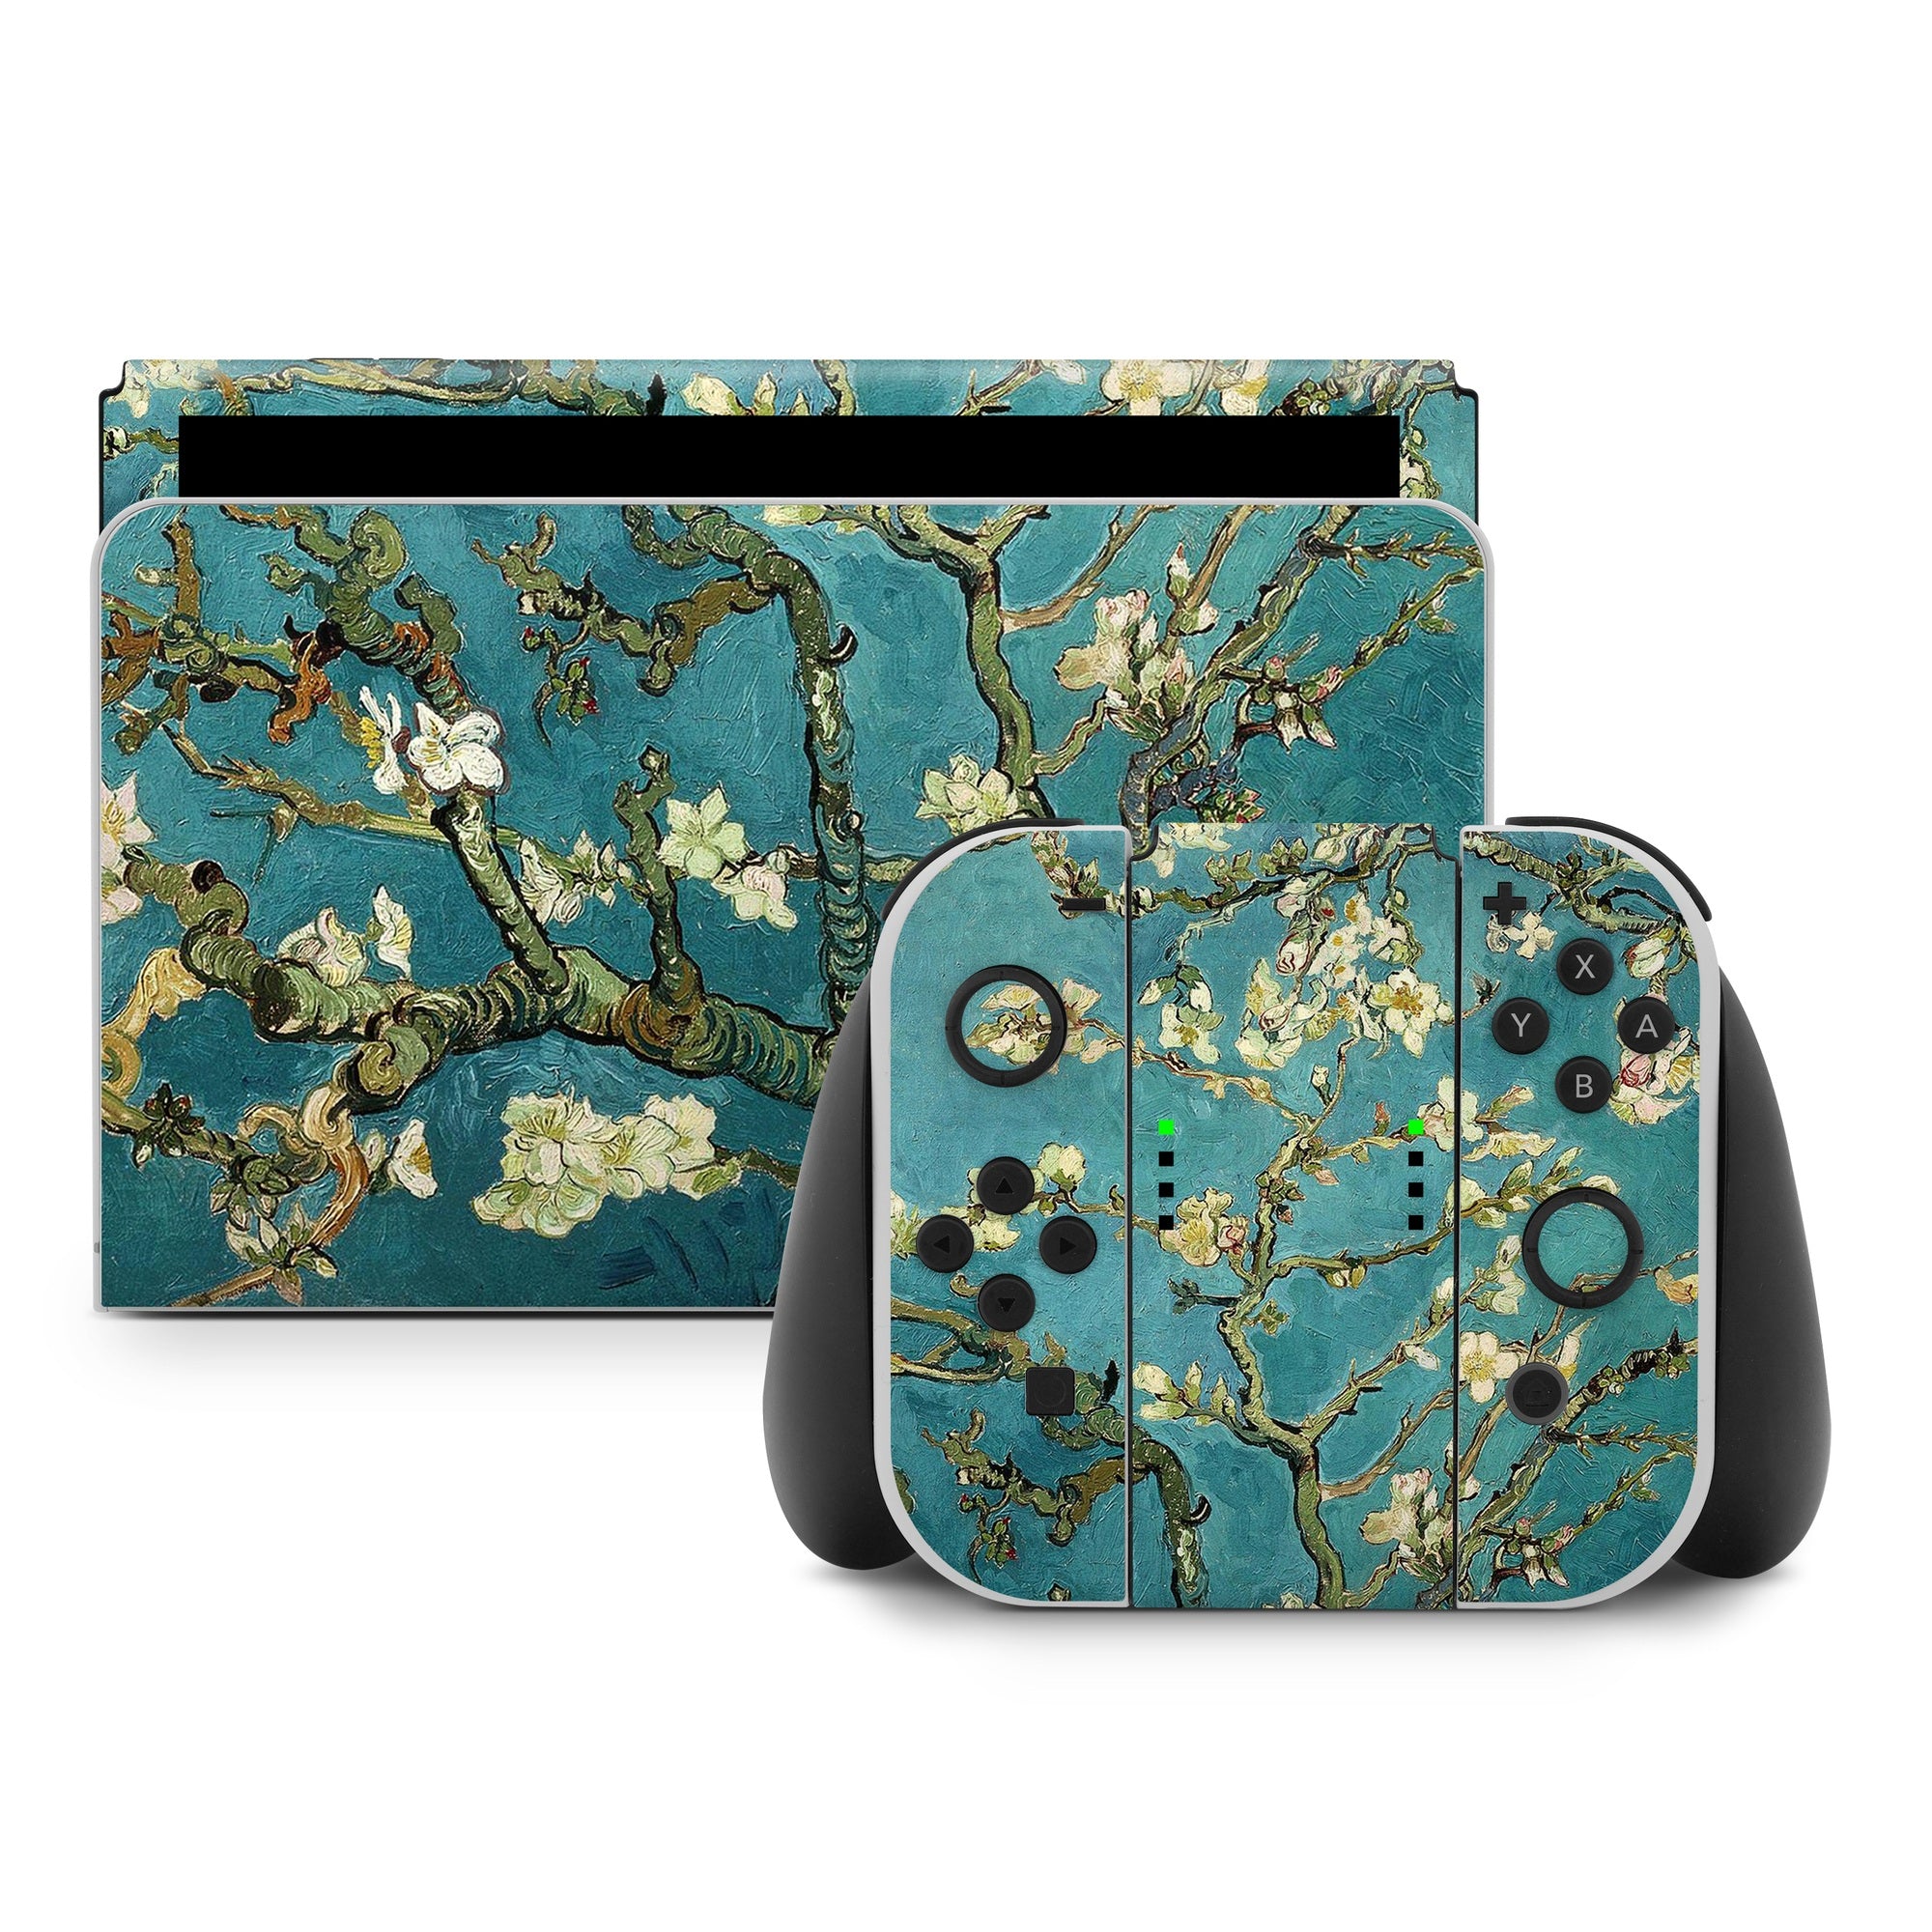 Blossoming Almond Tree - Nintendo Switch Skin